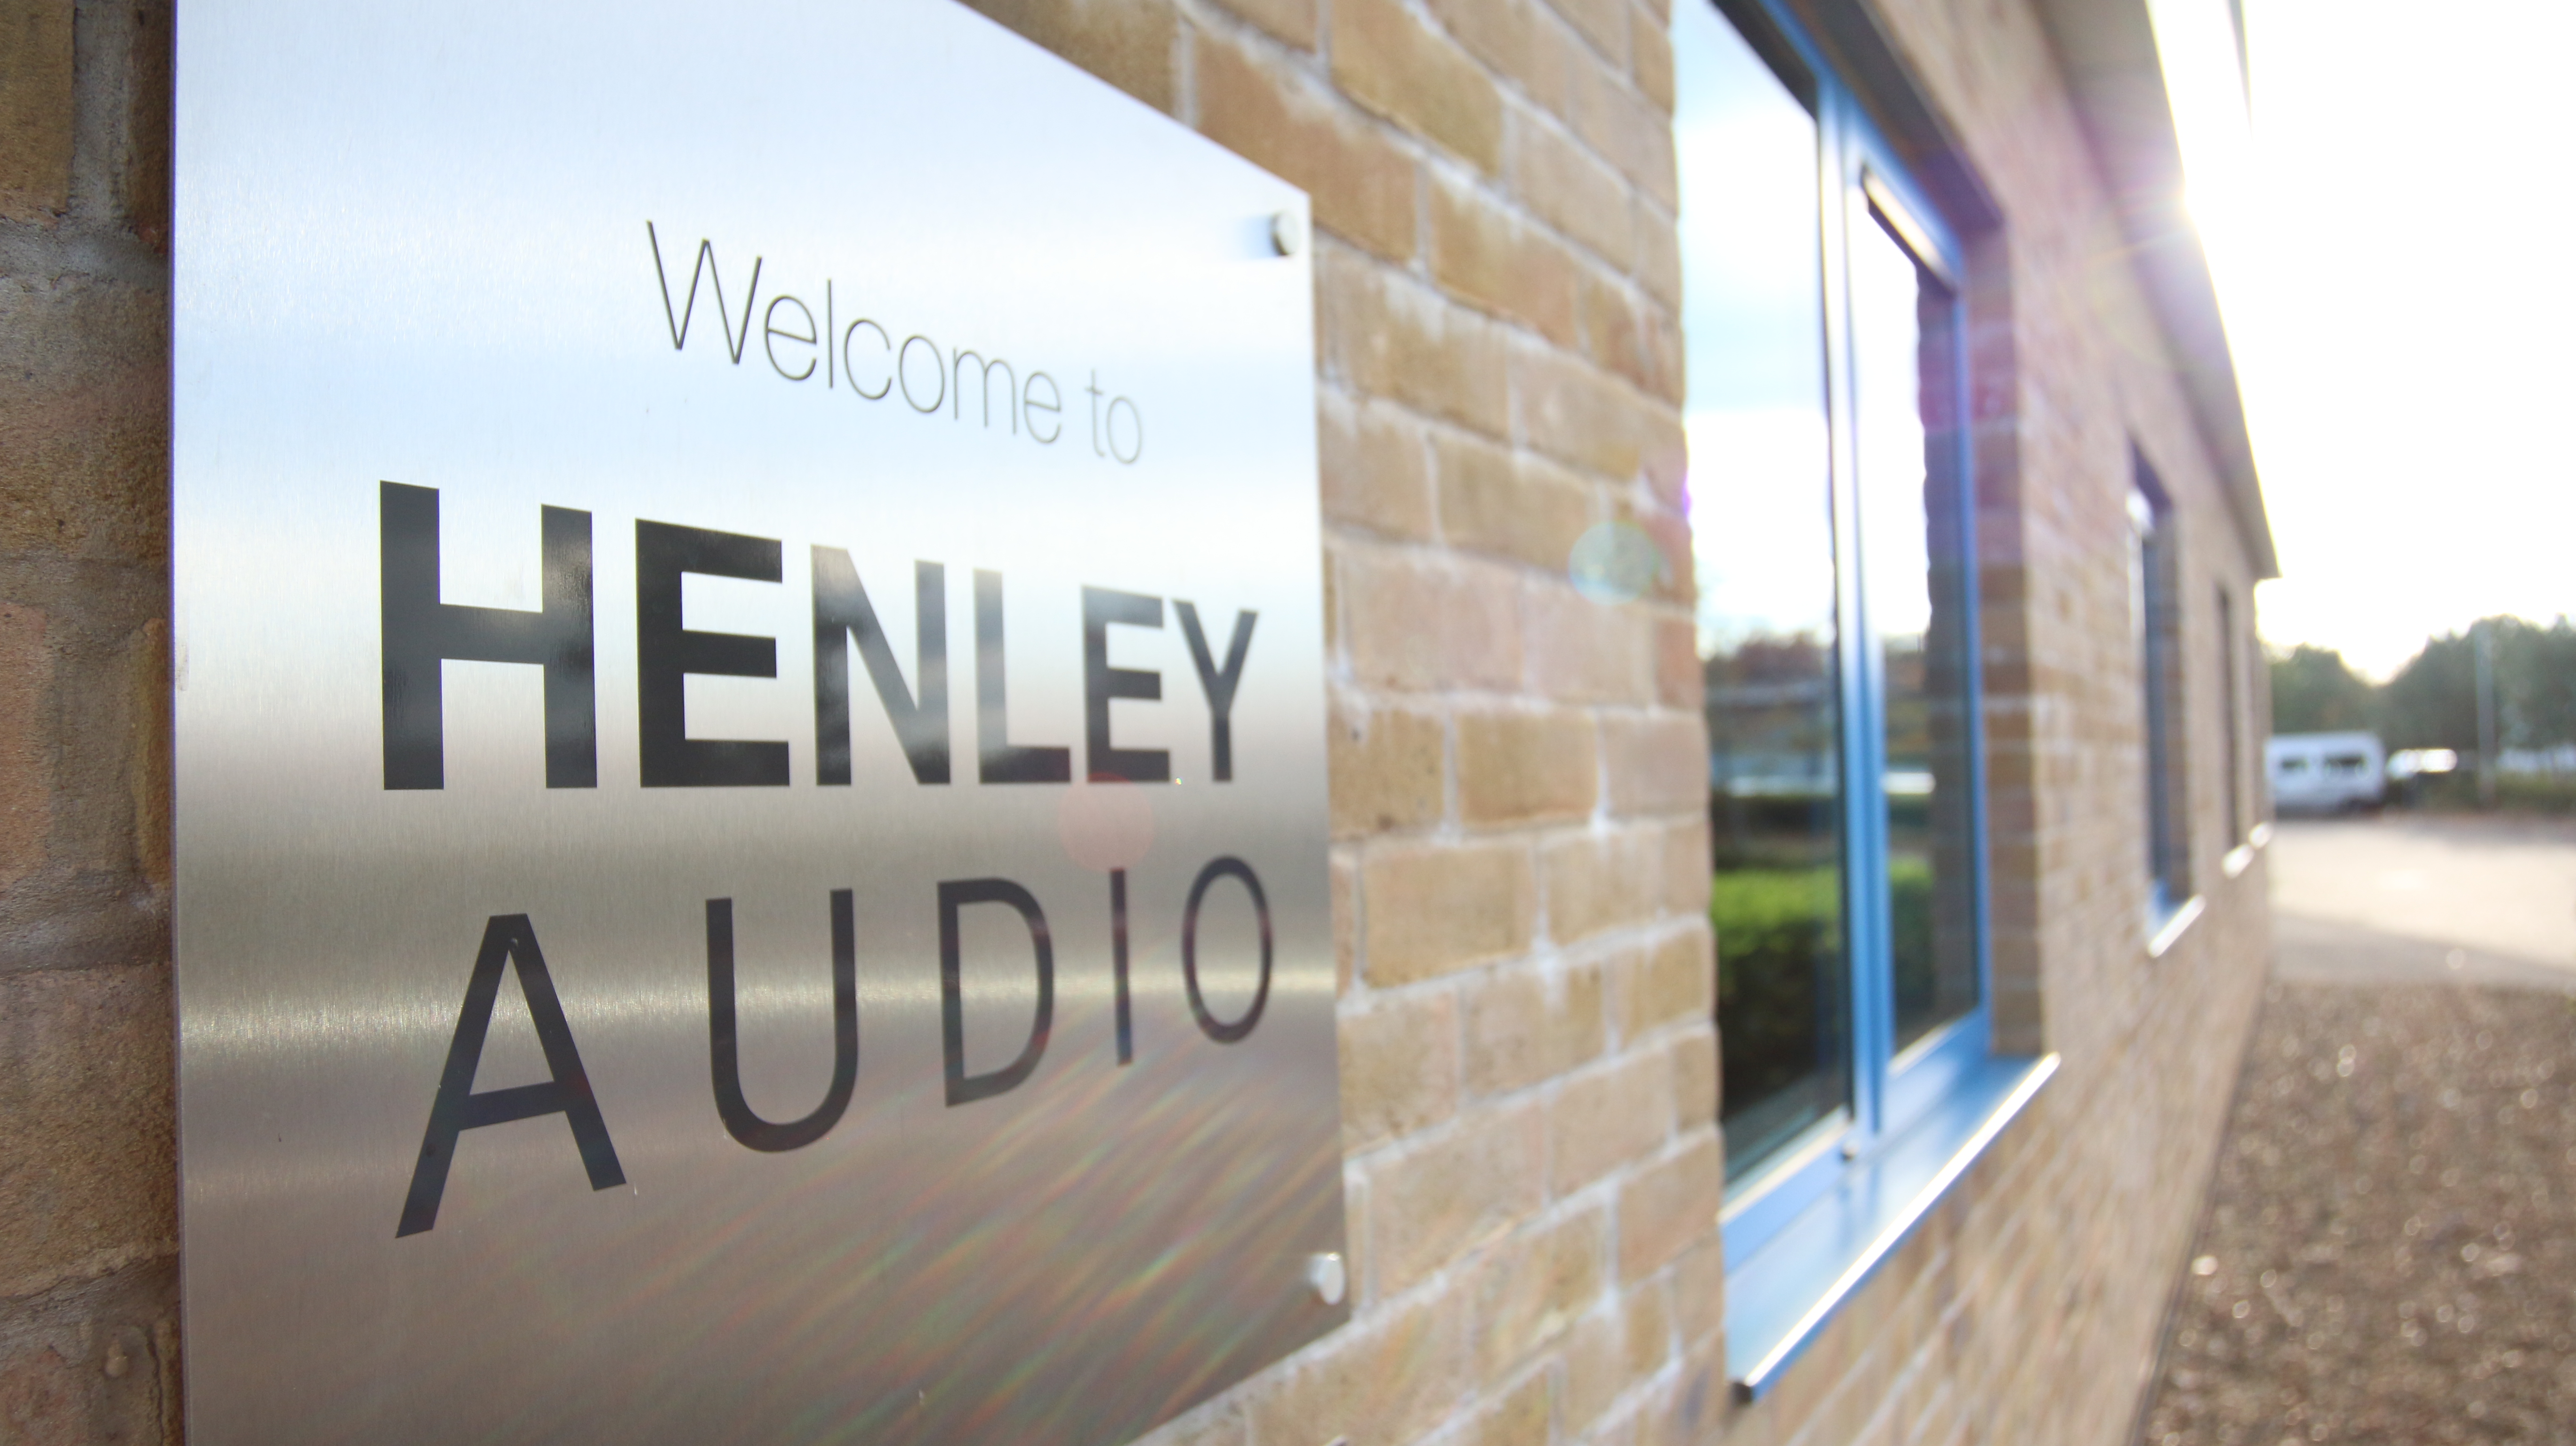 Henley Audio Building Exterior